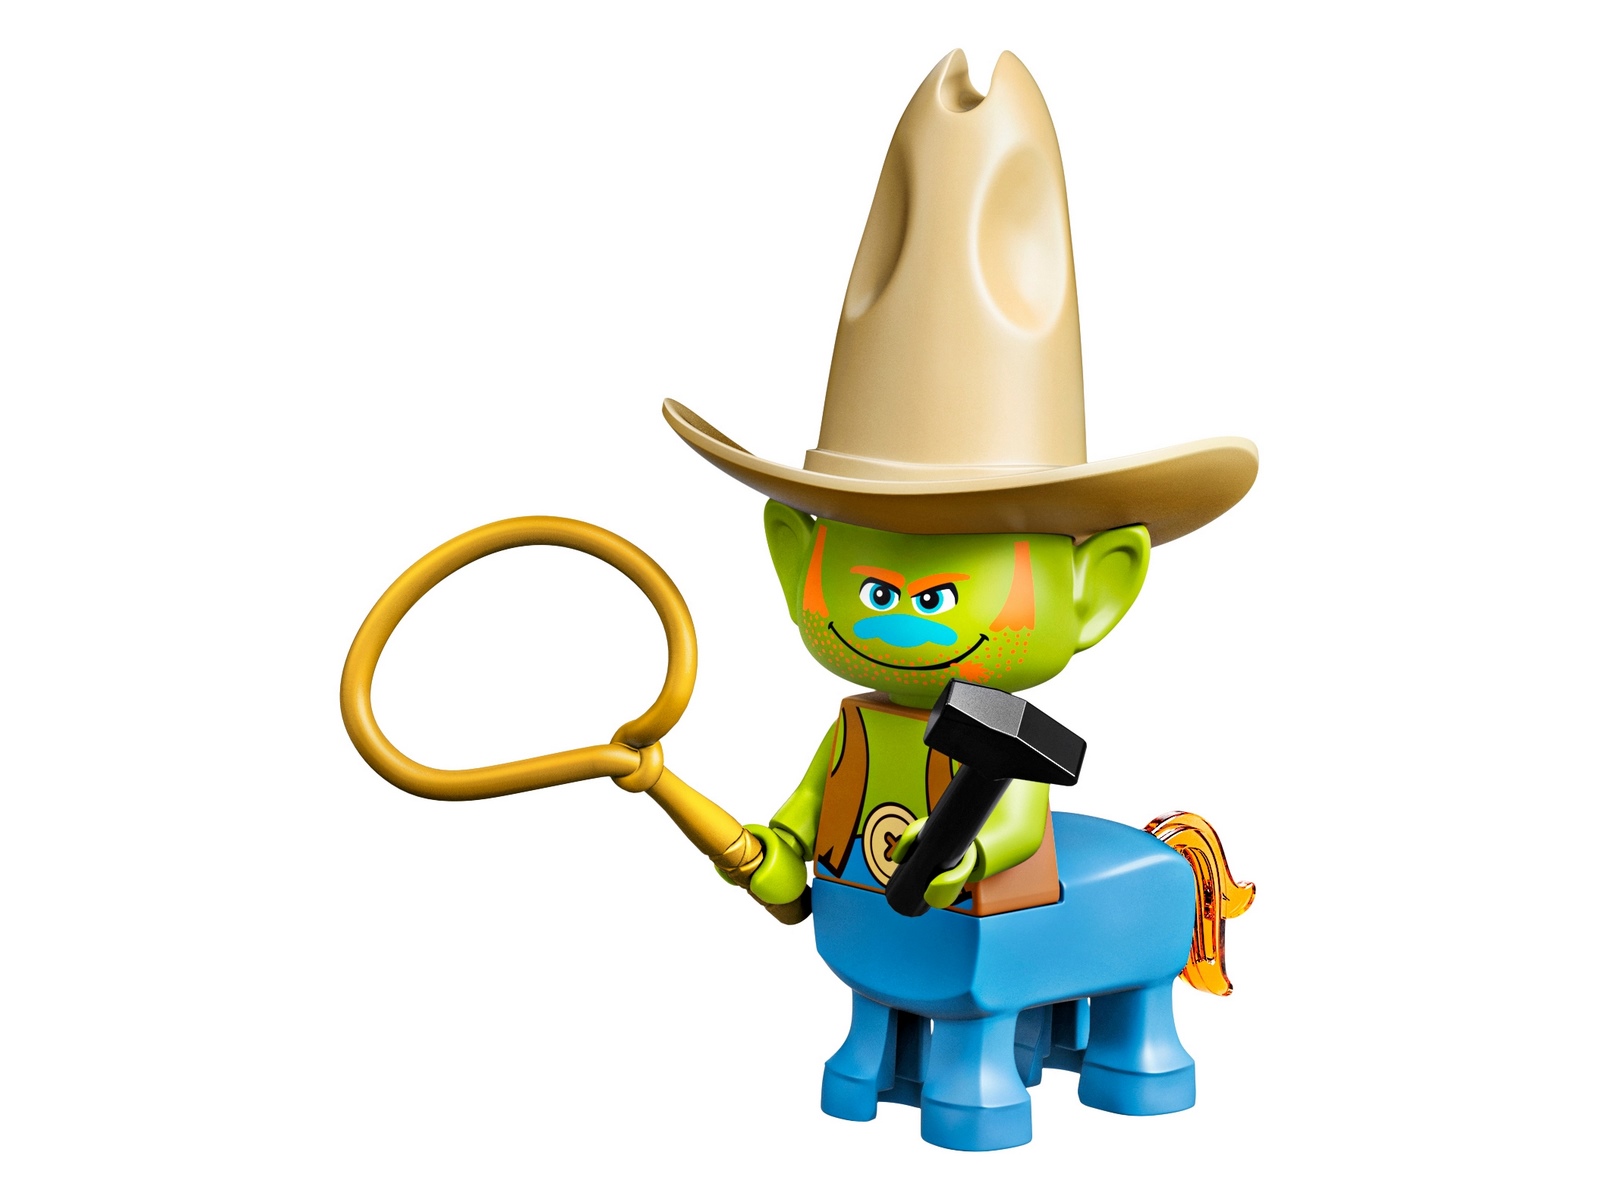 Конструктор LEGO Trolls «Приключение на плоту в Кантри-тауне» 41253 / 159 деталей